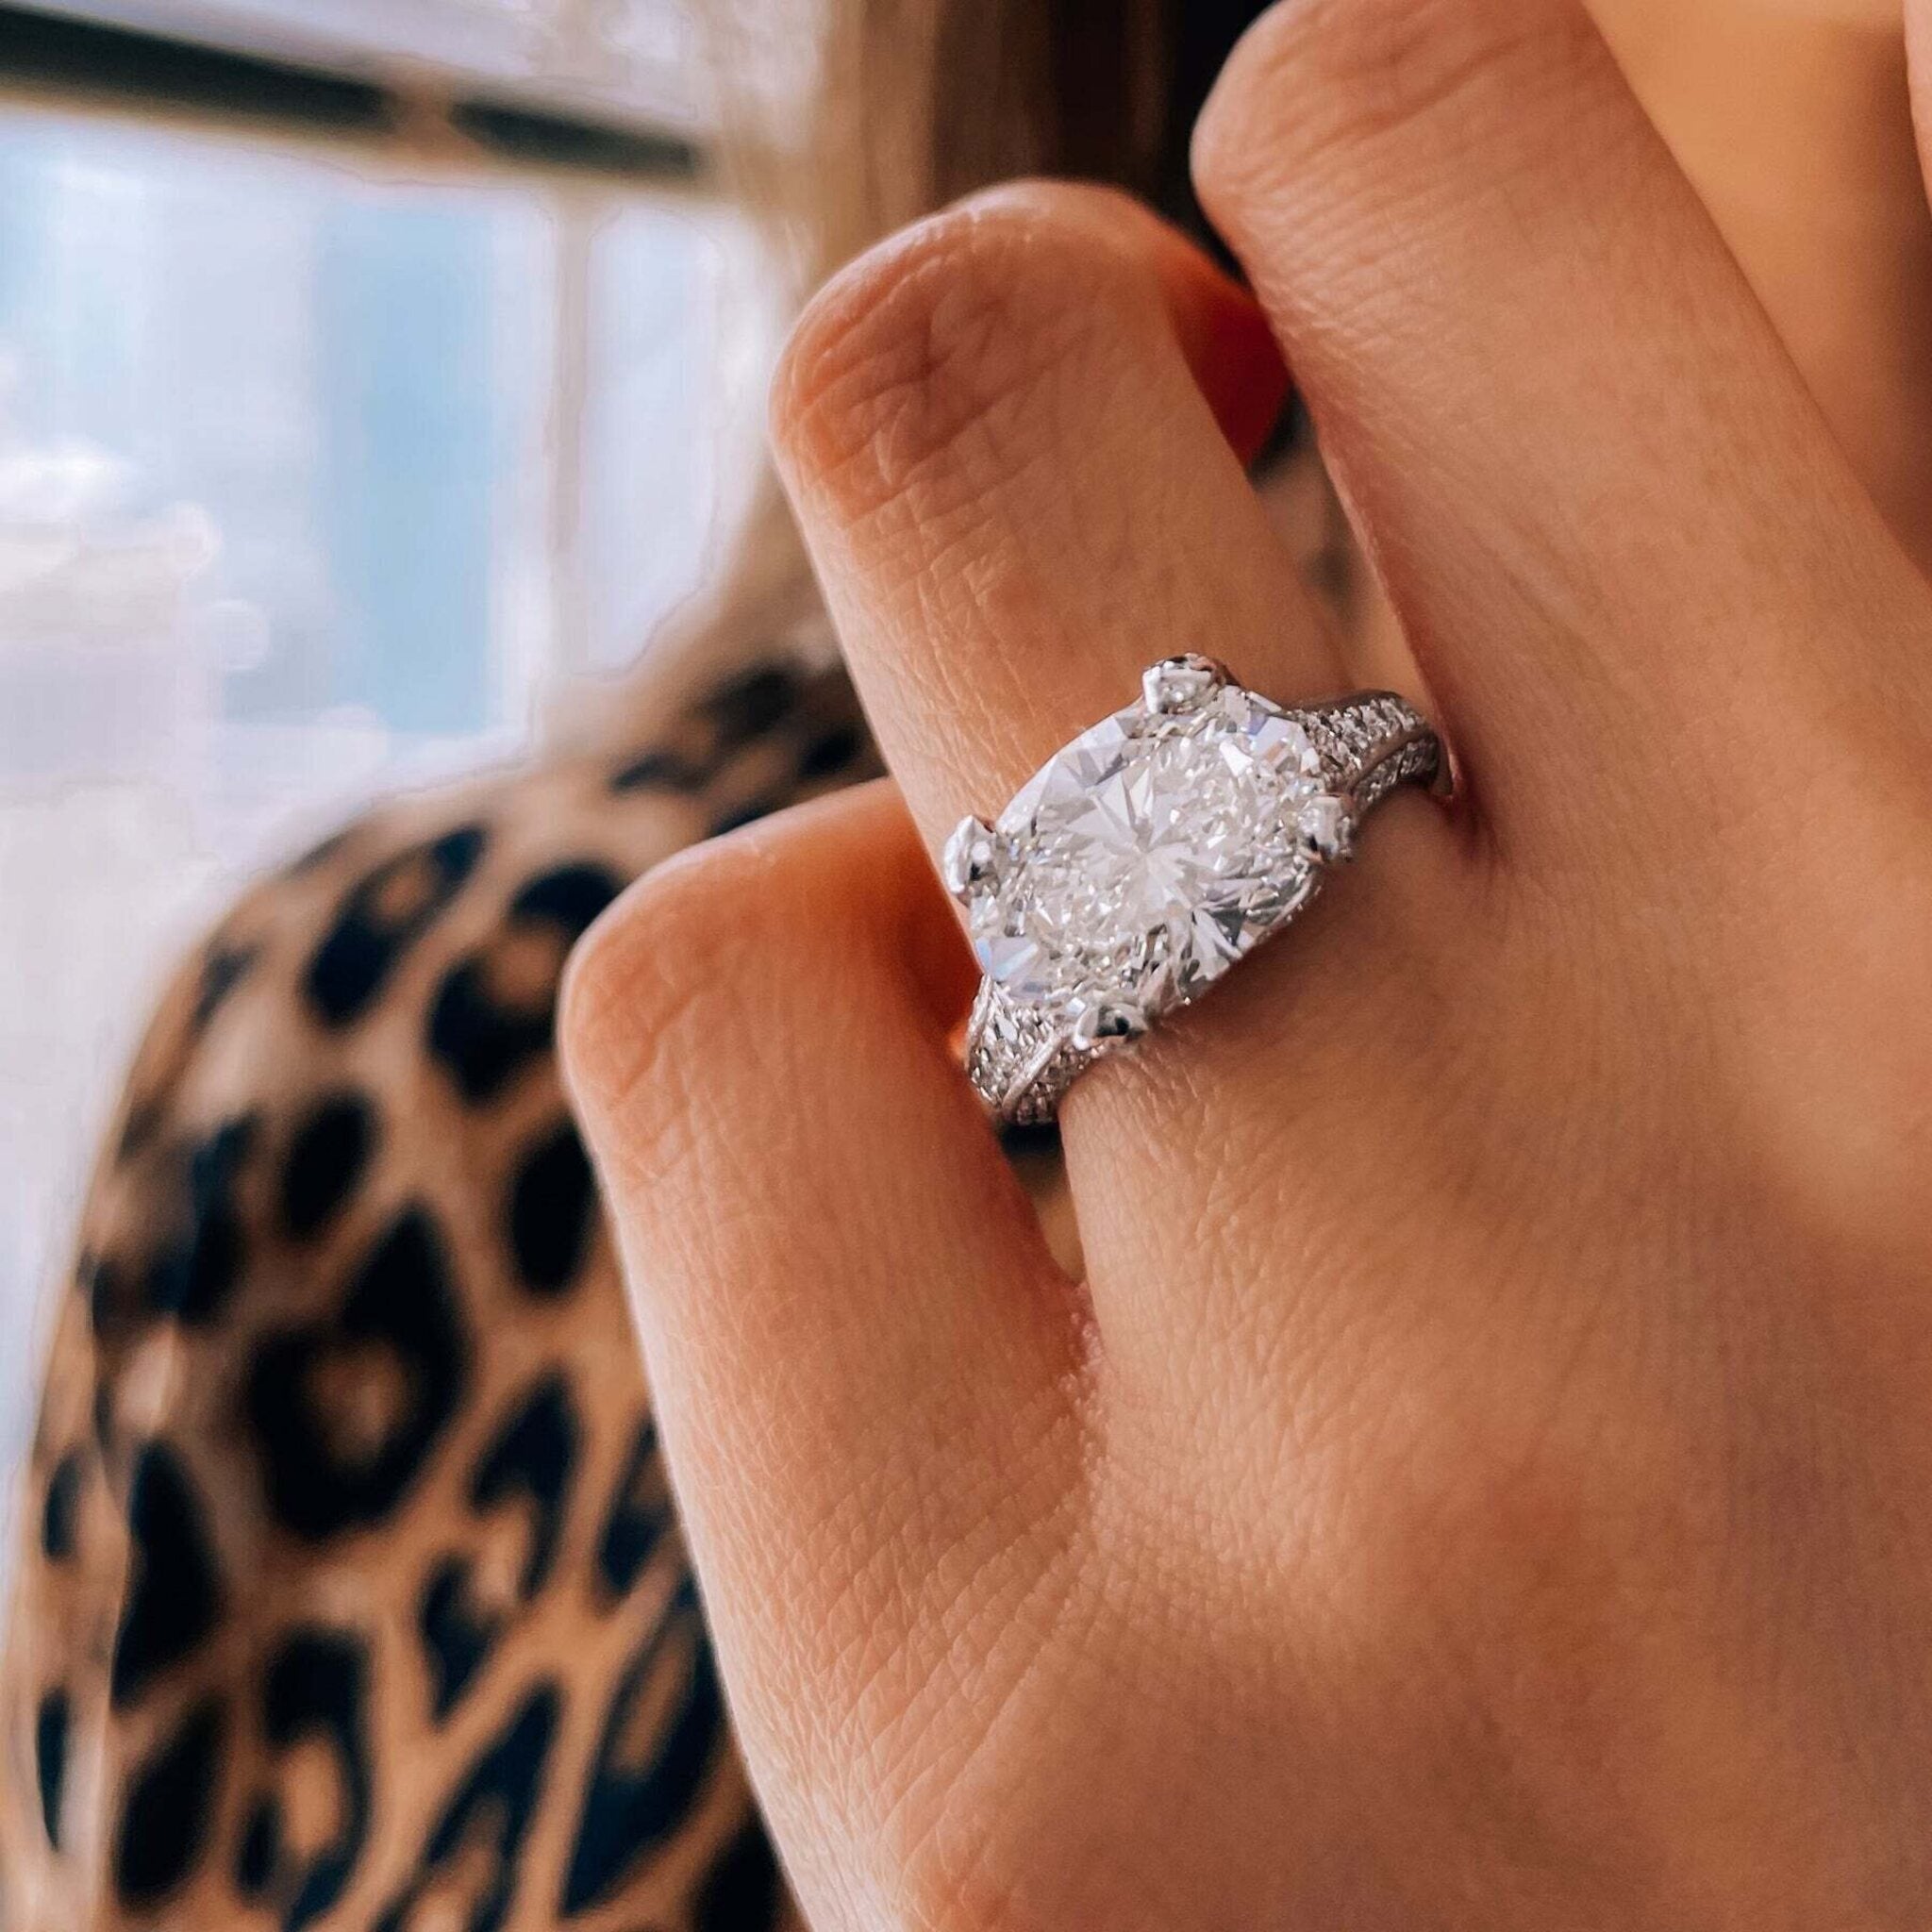 Guide for 4-Carat Princess Cut Diamond Rings - Lel Jewelry Blog